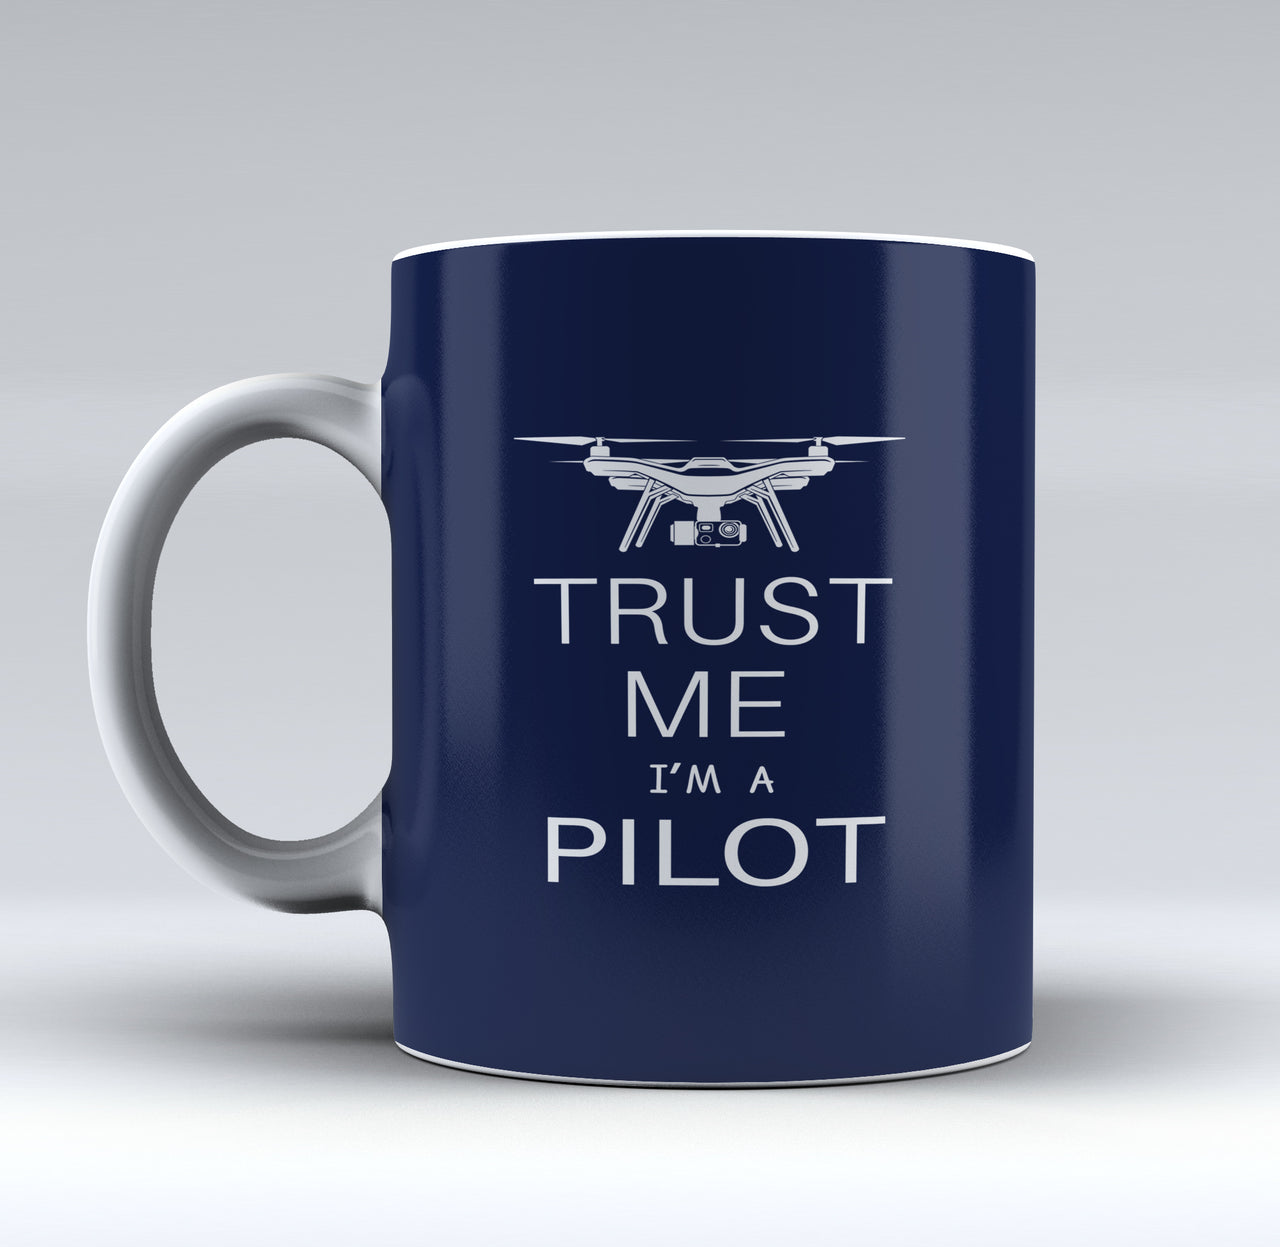 Trust Me I'm a Pilot (Drone) Designed Mugs